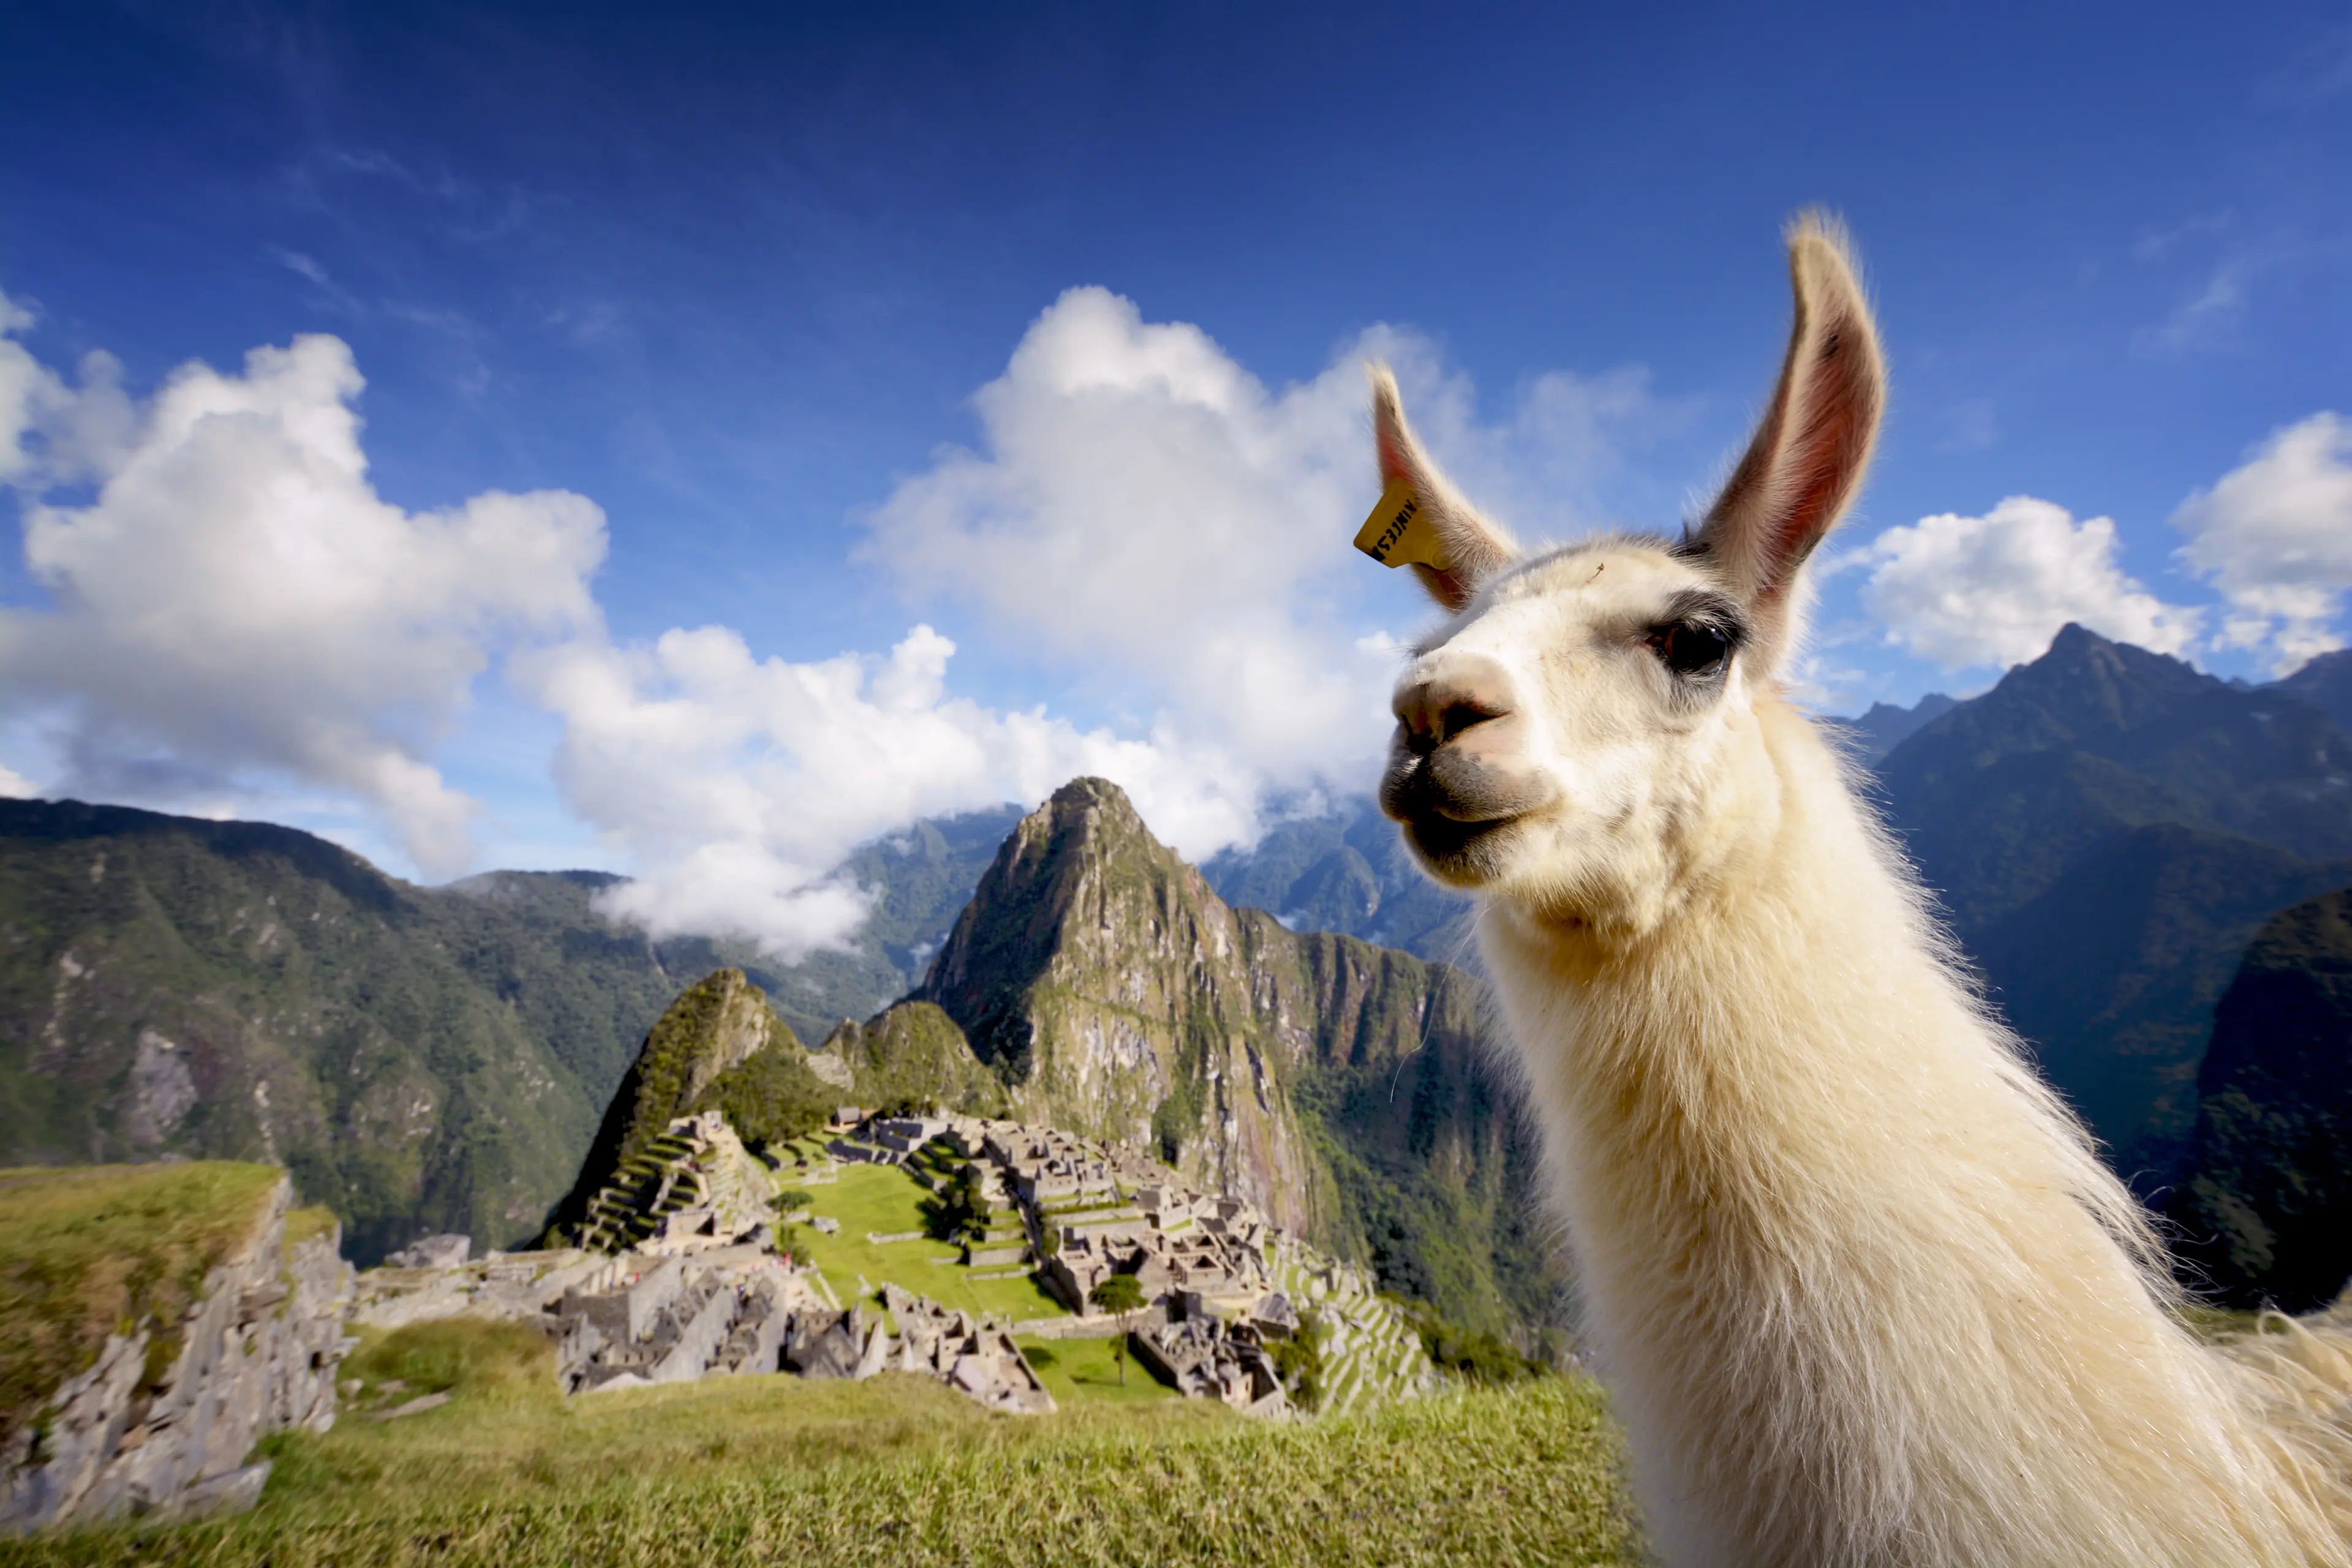 3-Day Solo Adventure: Unexplored Machu Picchu, Sightseeing & Local Cuisine